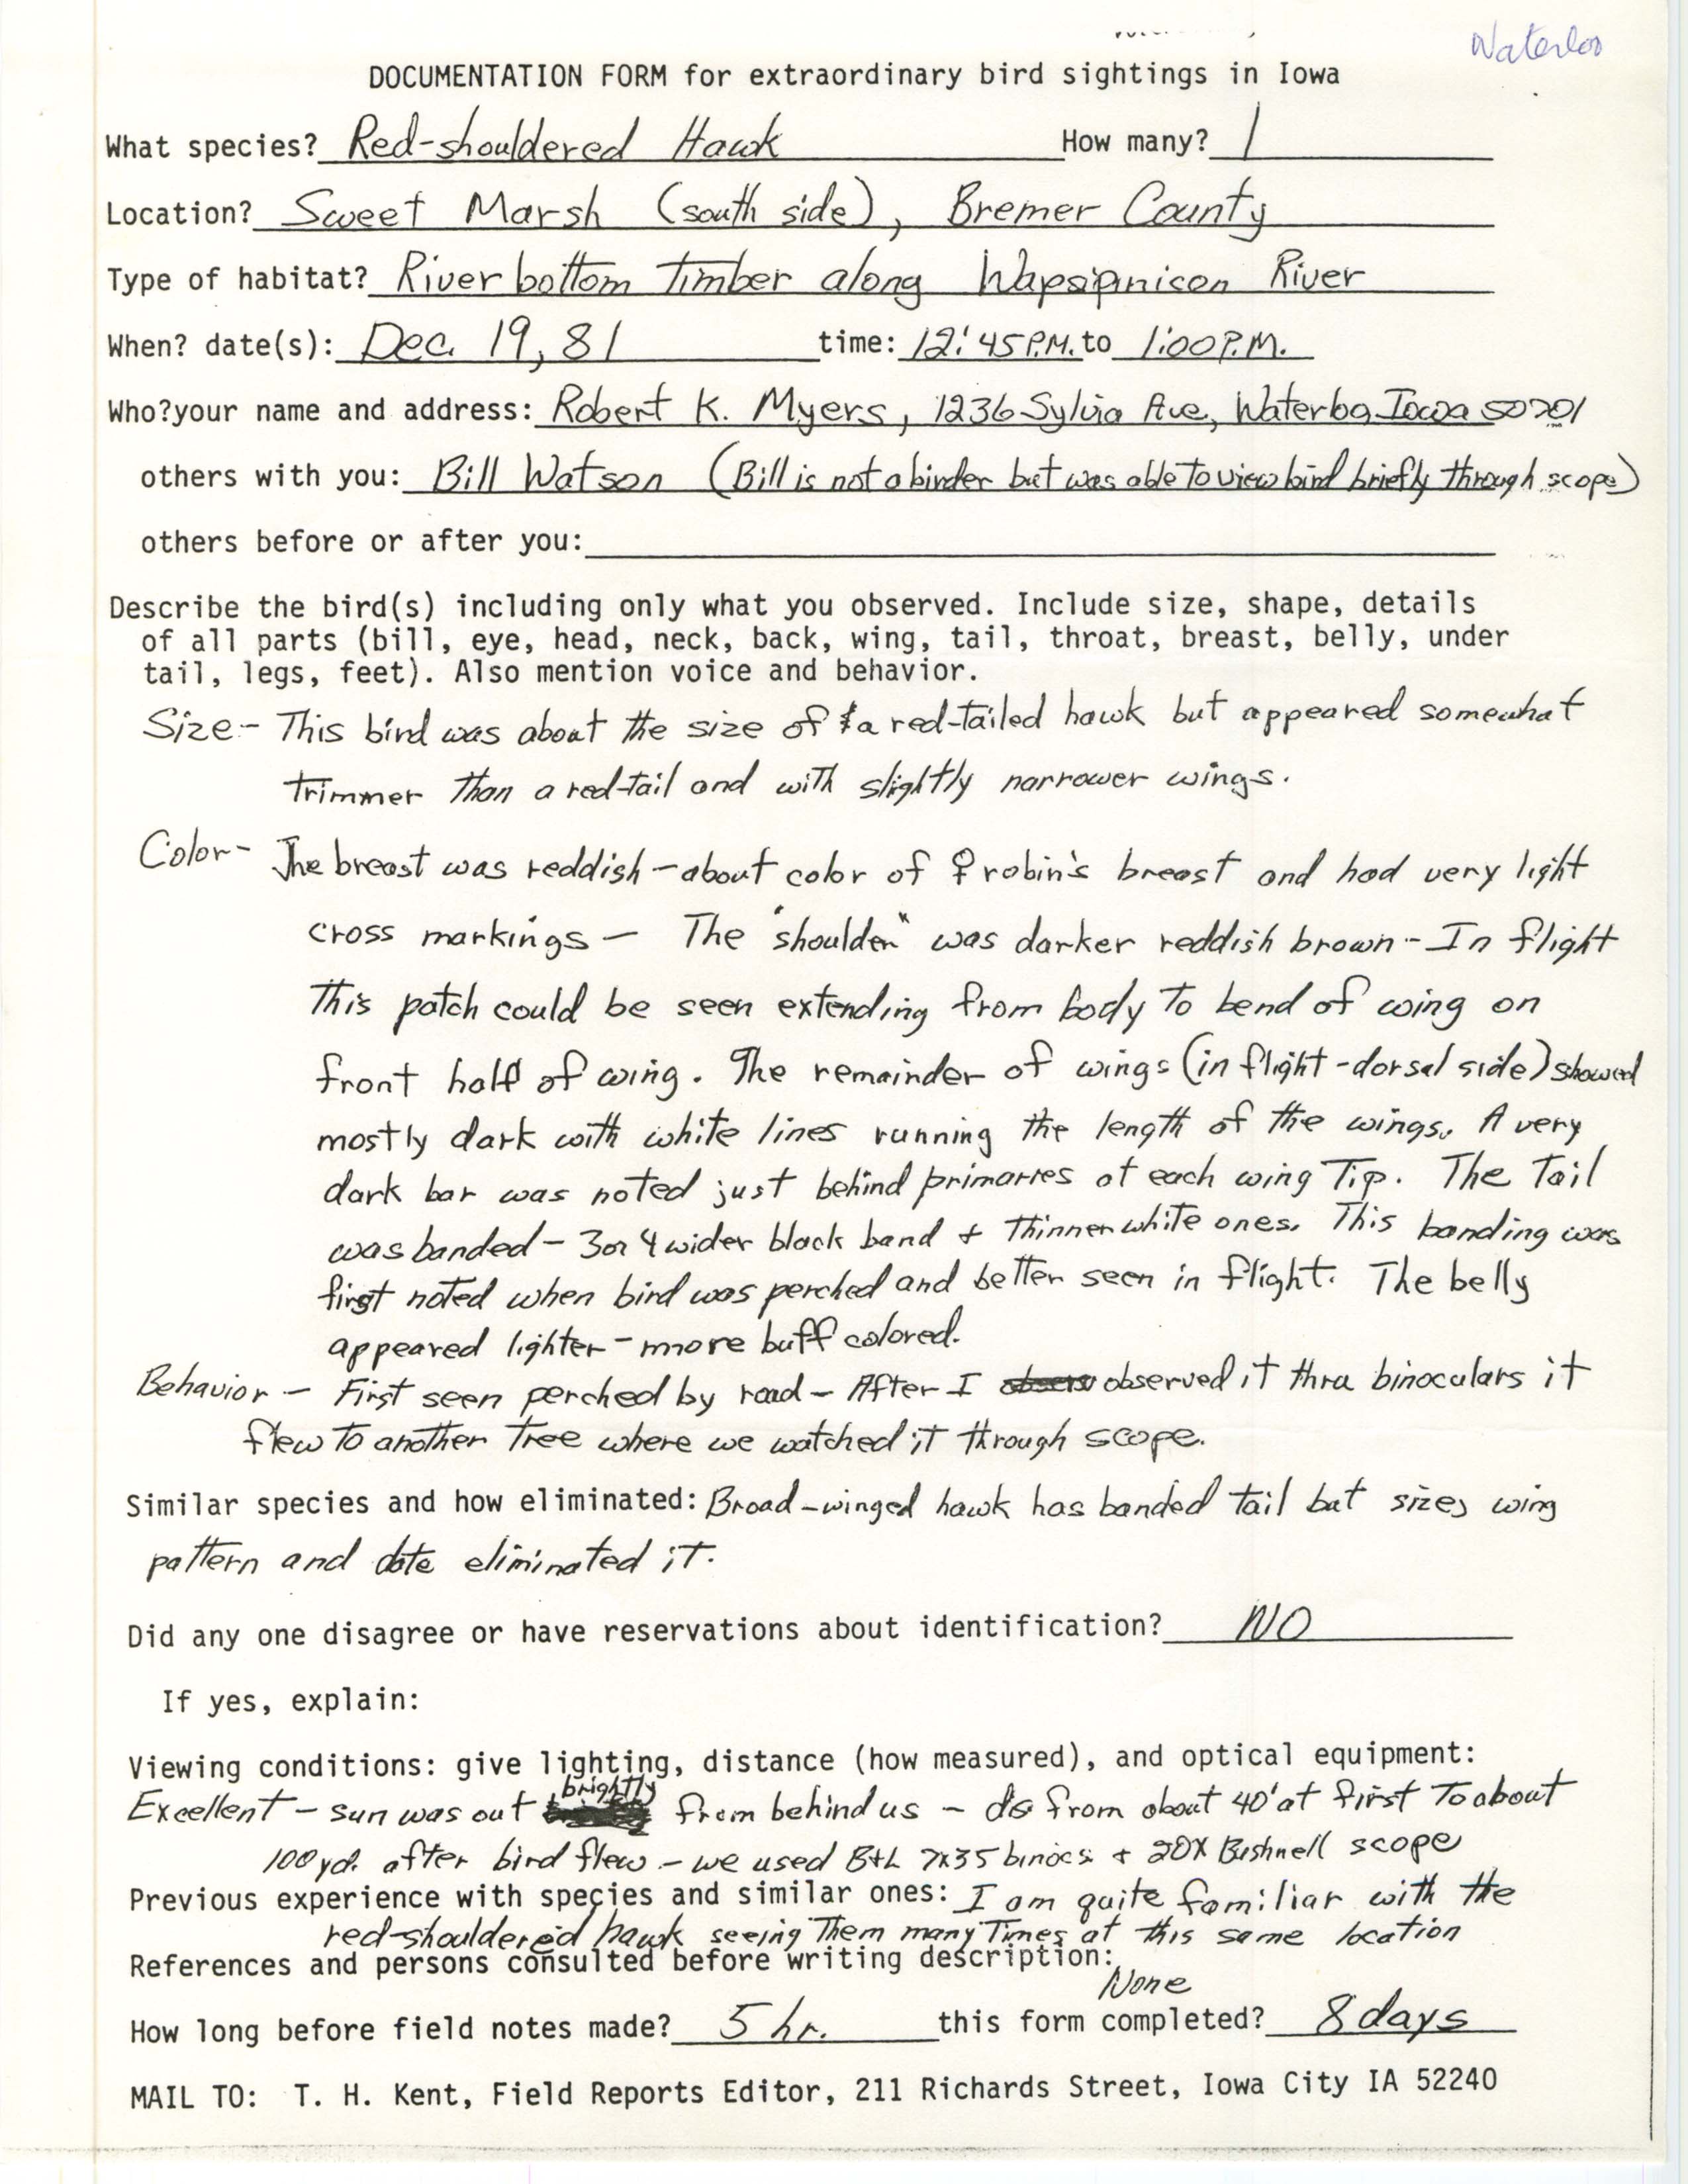 Rare bird documentation form for Red-shouldered Hawk at Sweet Marsh, 1981